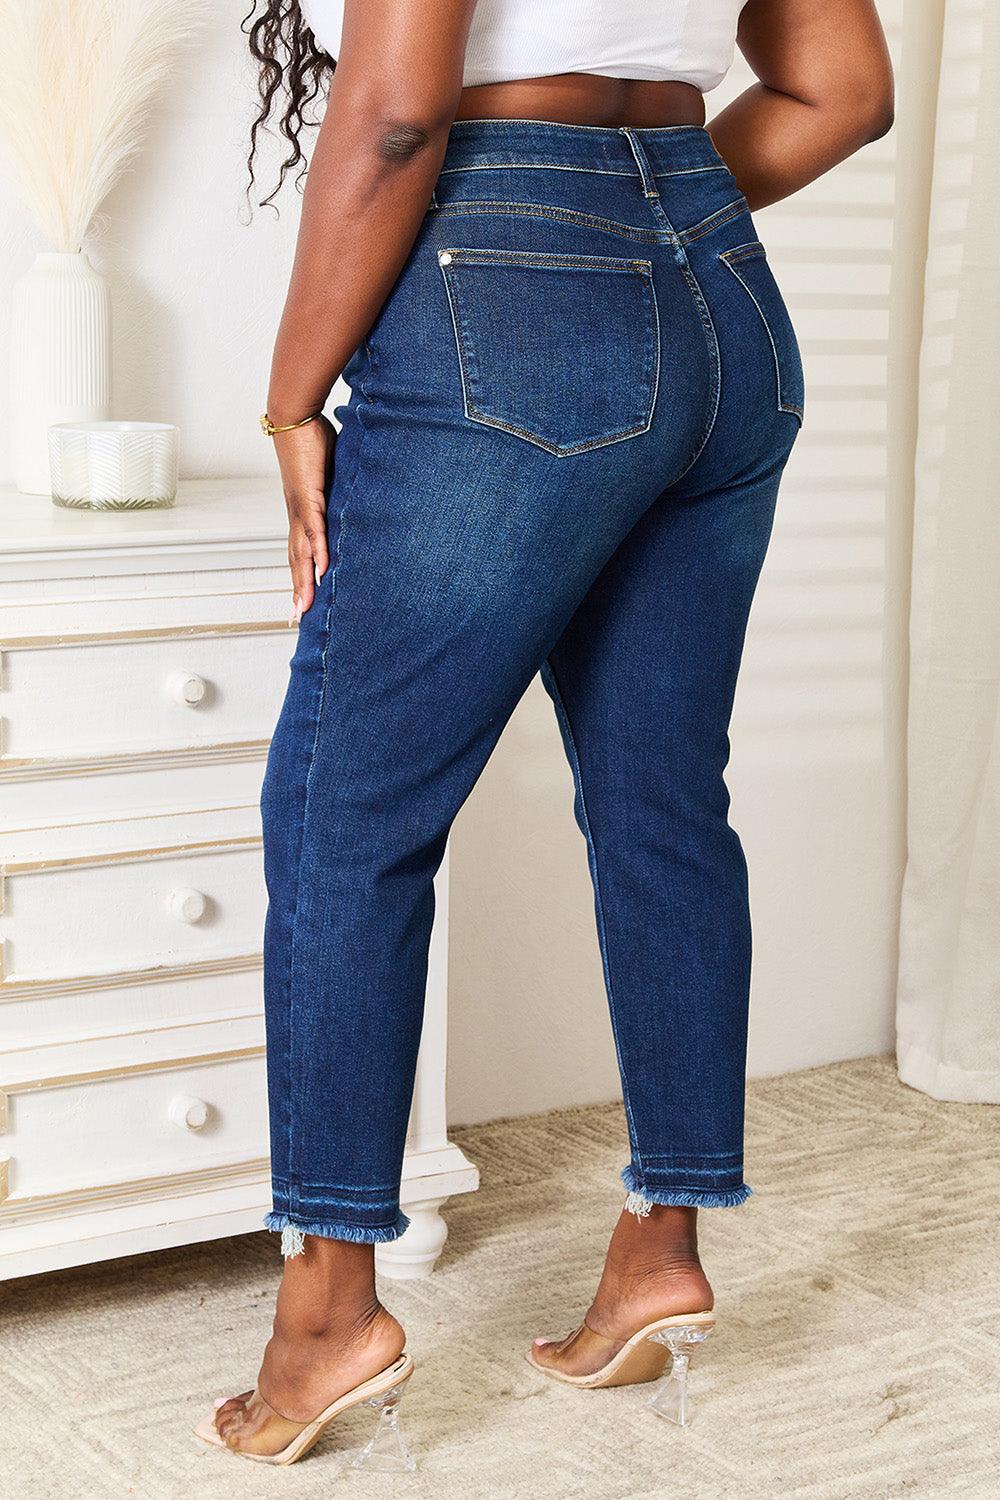 Women's Jeans Judy Blue Full Size High Waist Released Hem Slit Jeans